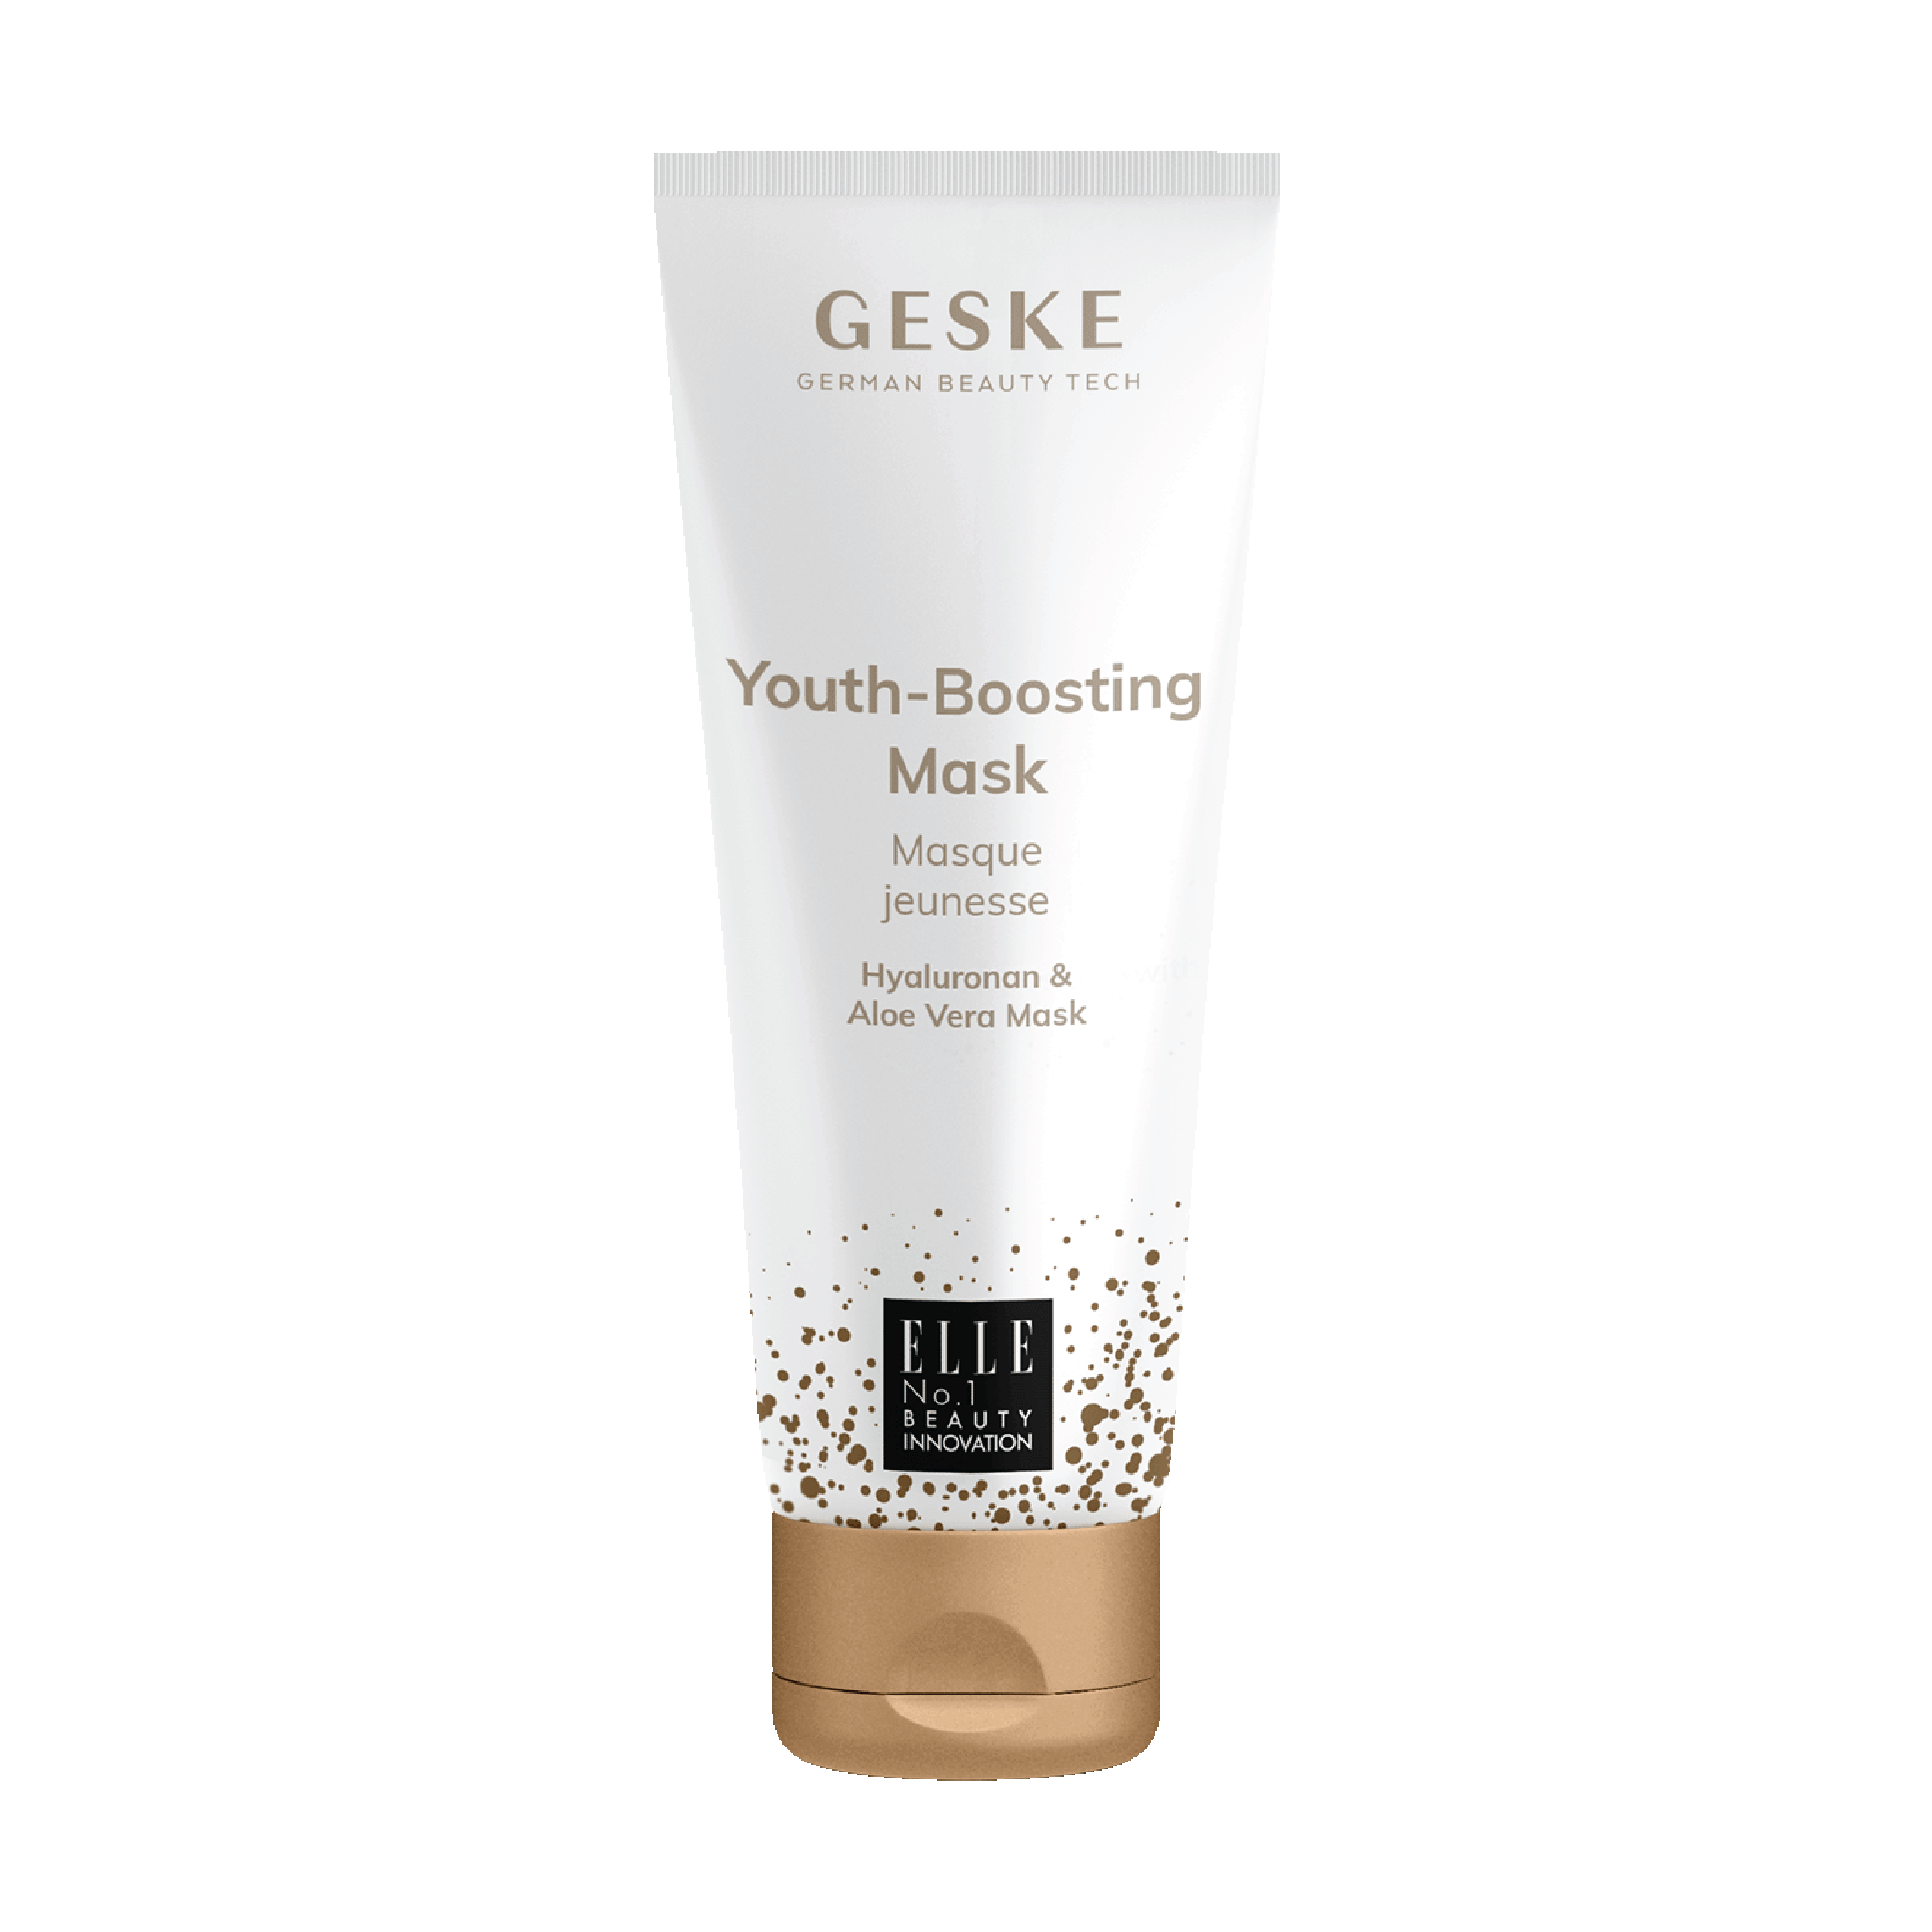 Geske Youth-Boosting Mask, 50 ml